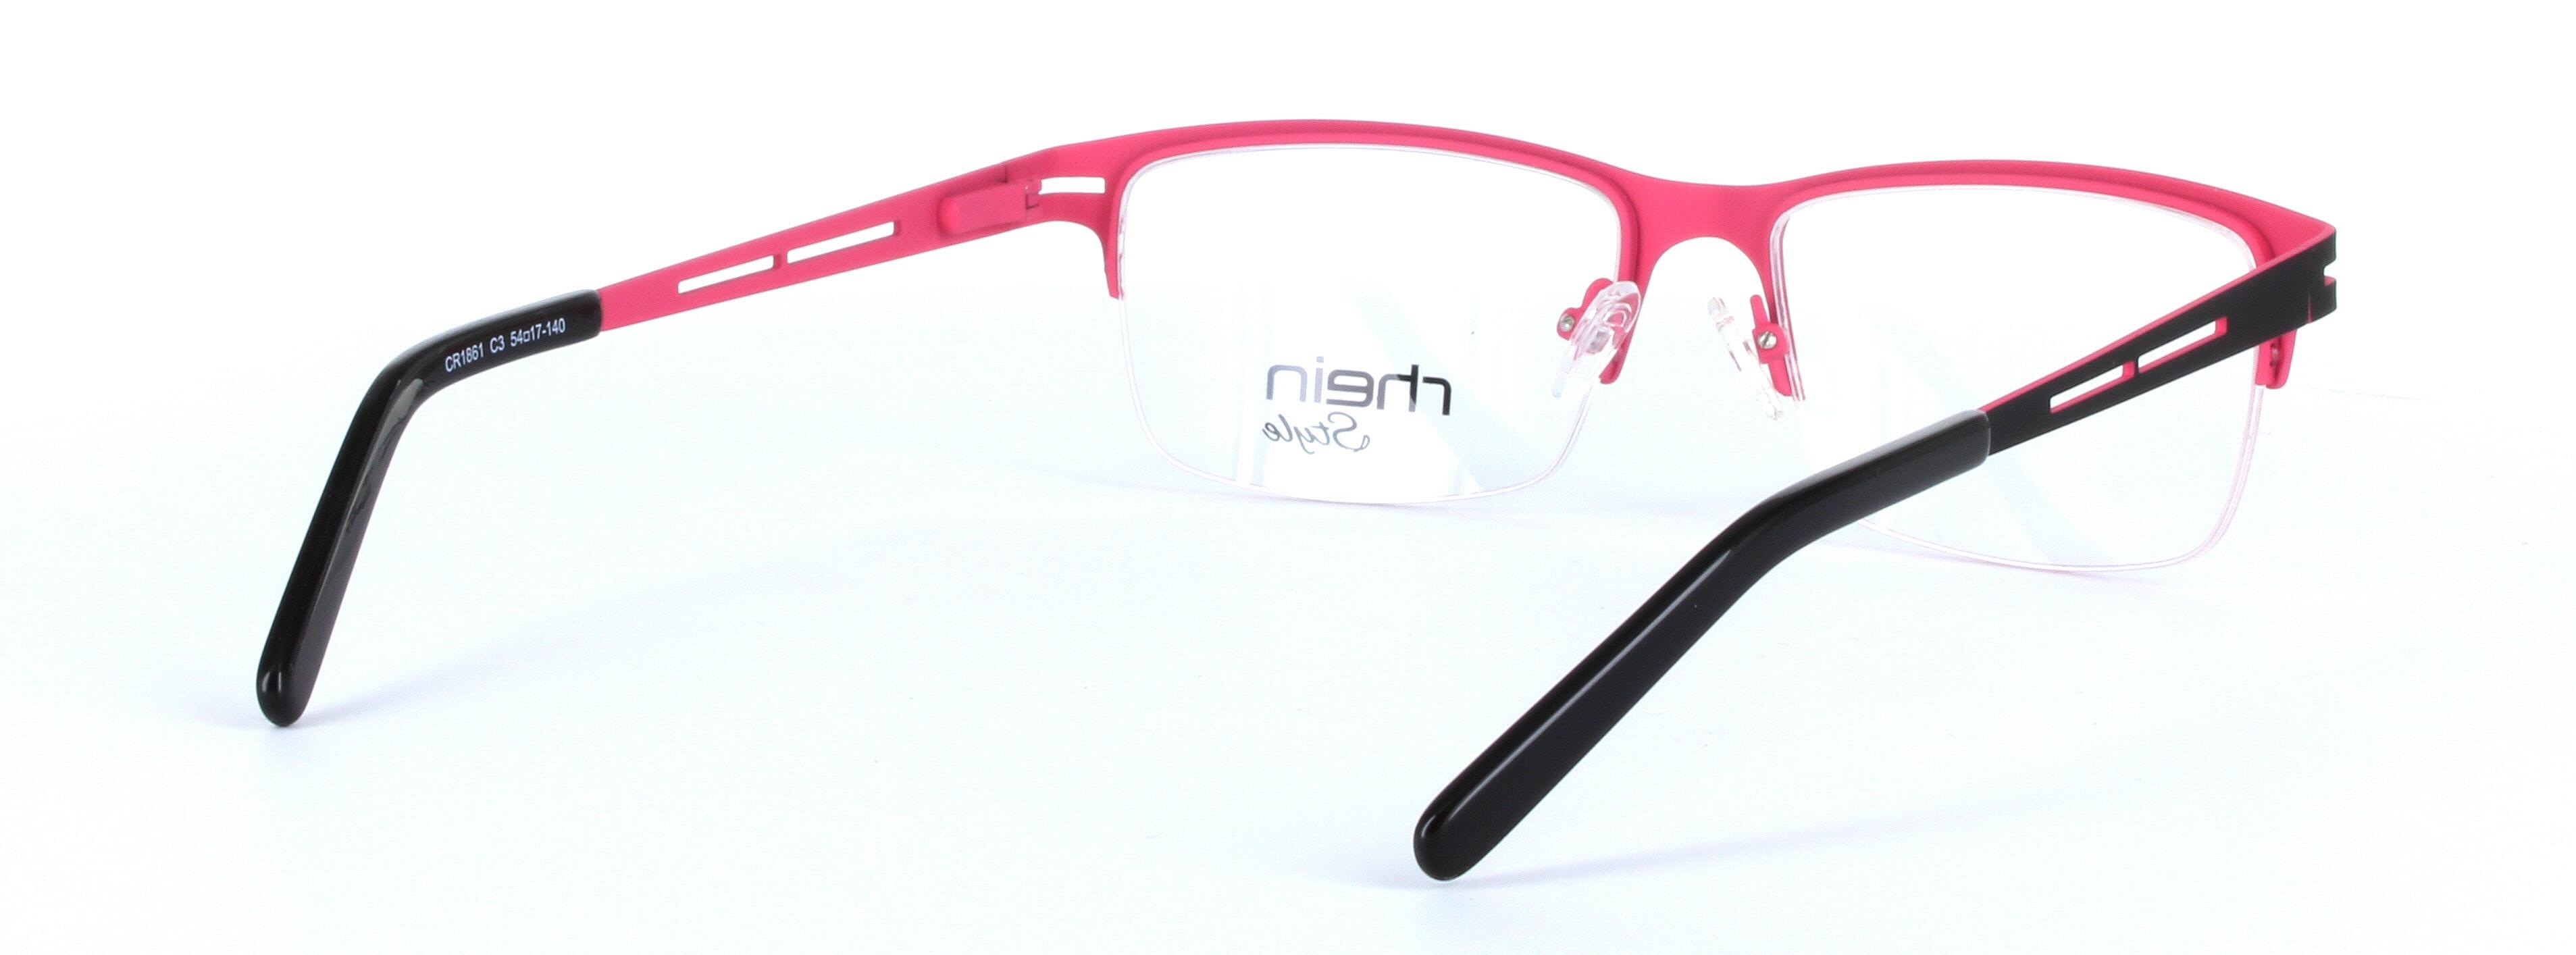 Curtis Black and Pink Semi Rimless Rectangular Metal Glasses - image View 4